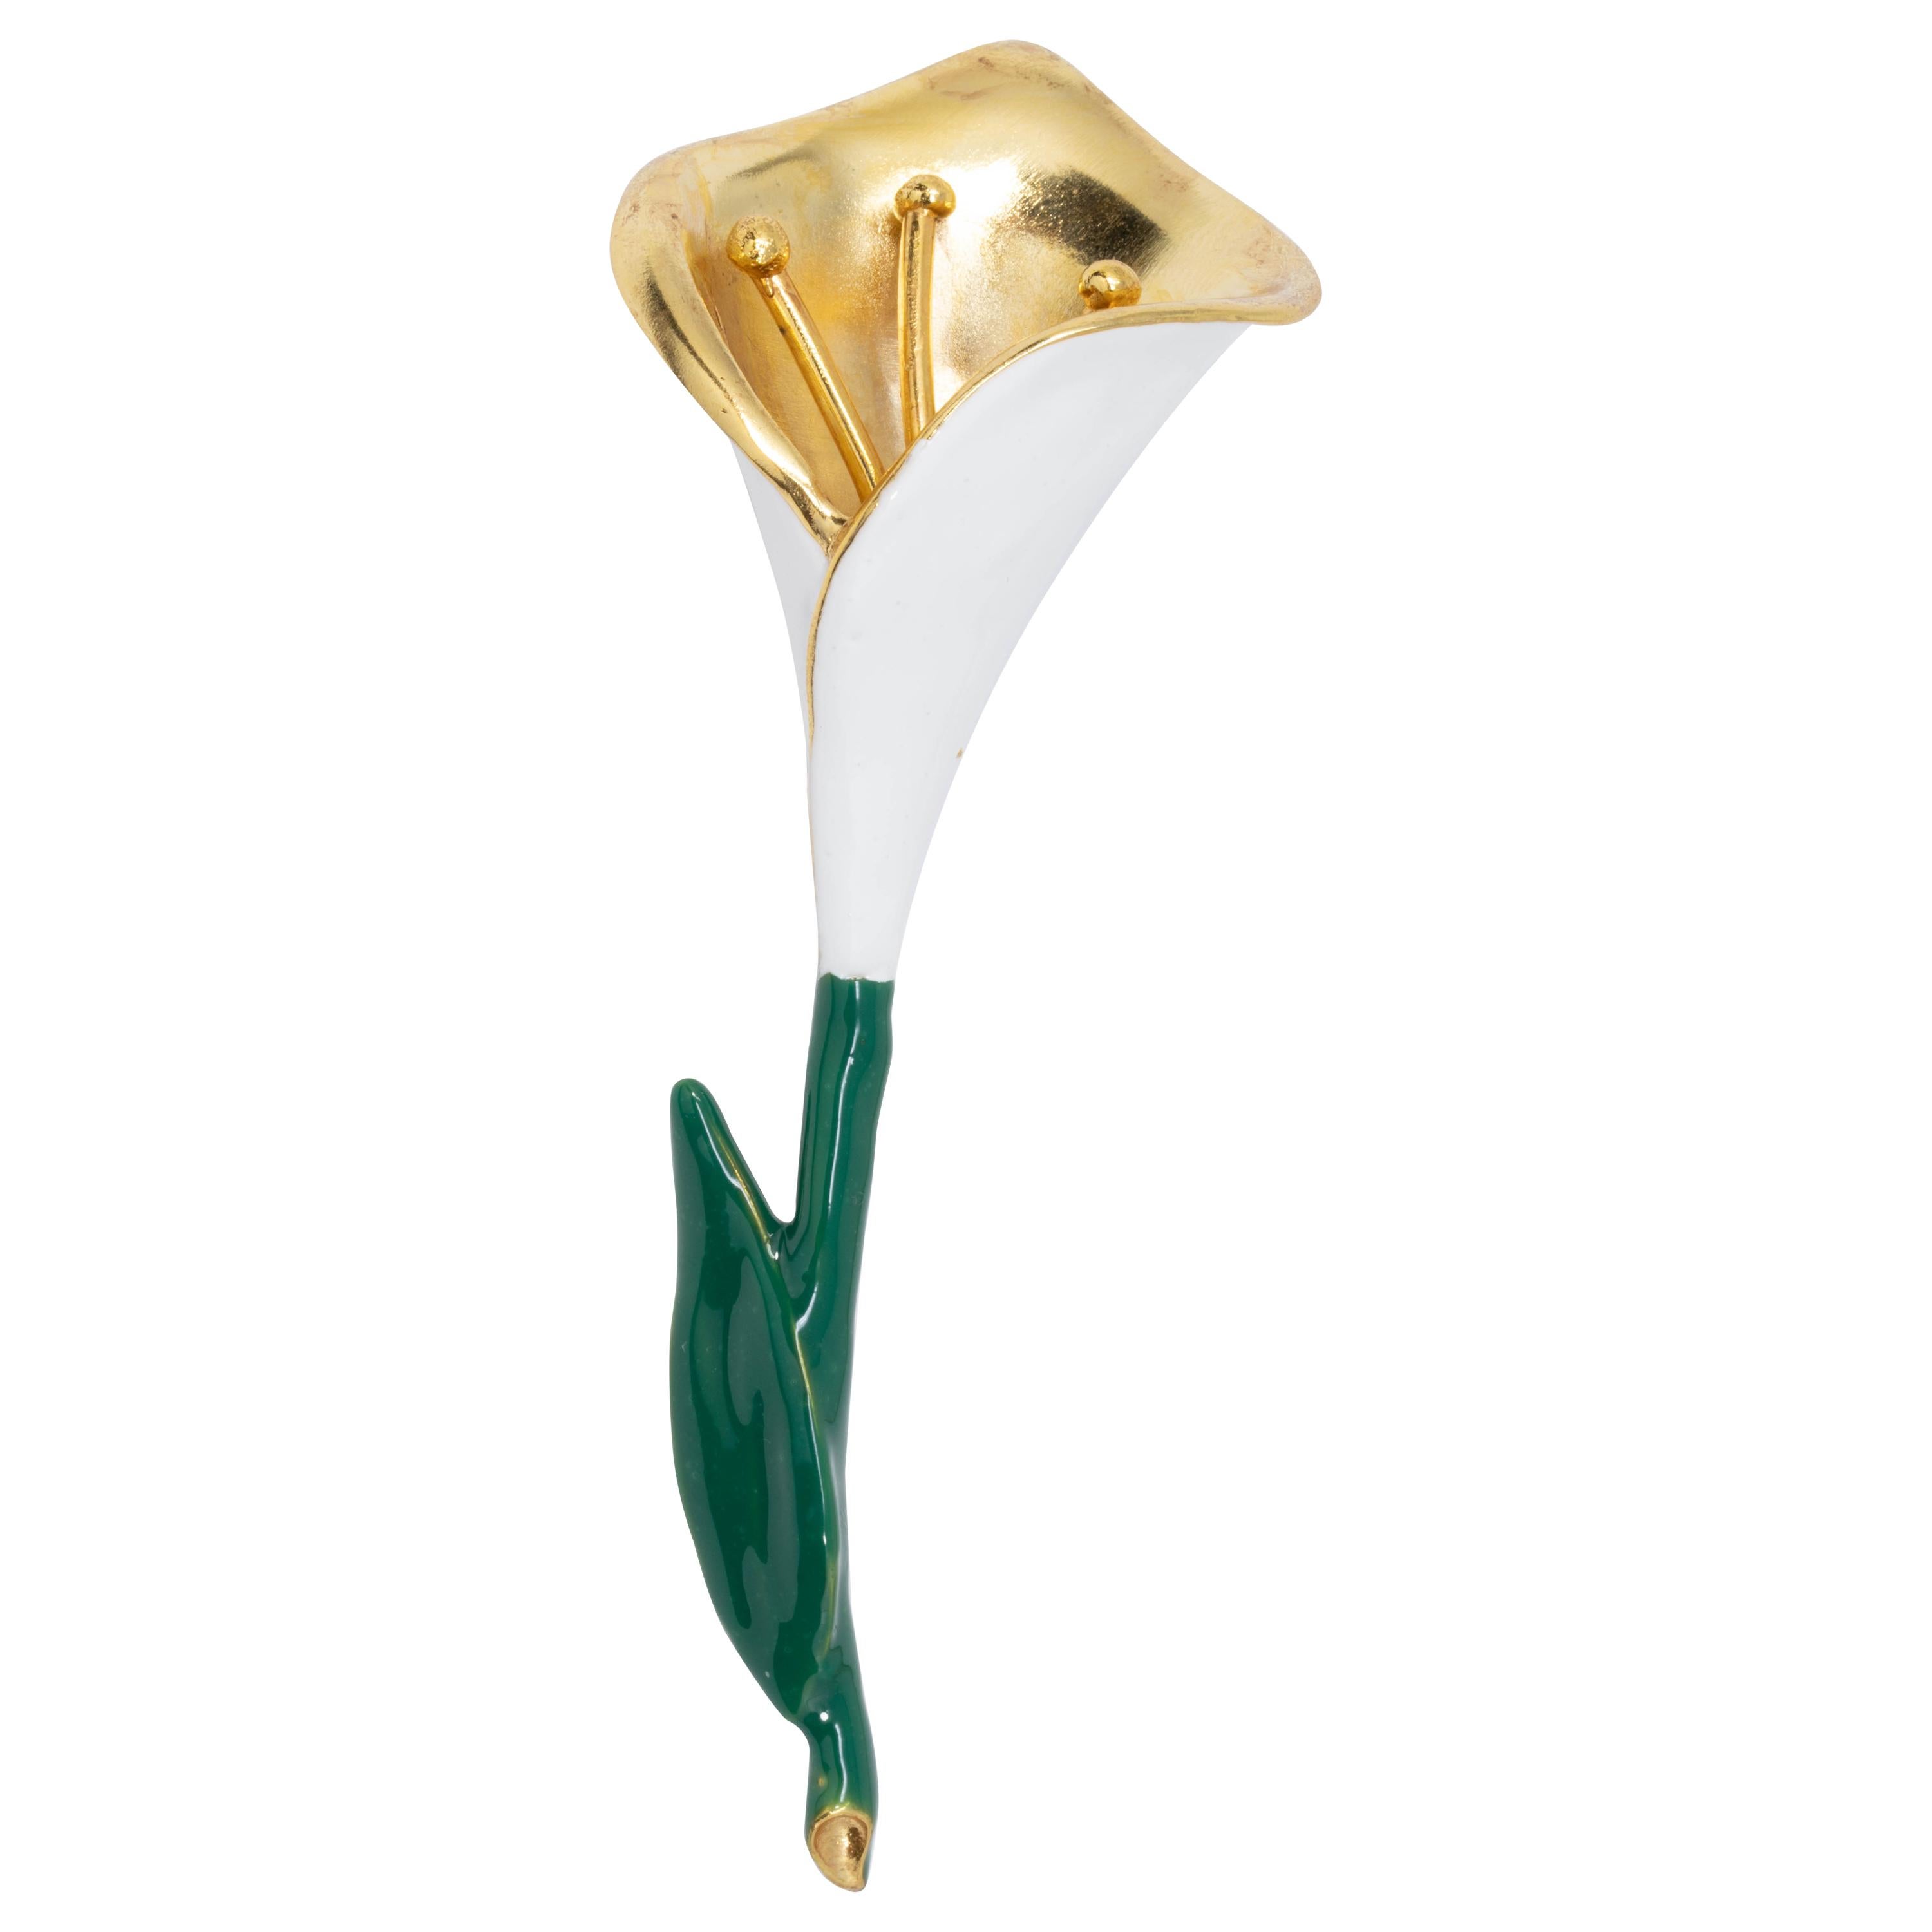 Oscar de la Renta Broche Calla Lily en or, émail vert et blanc et épingle en vente